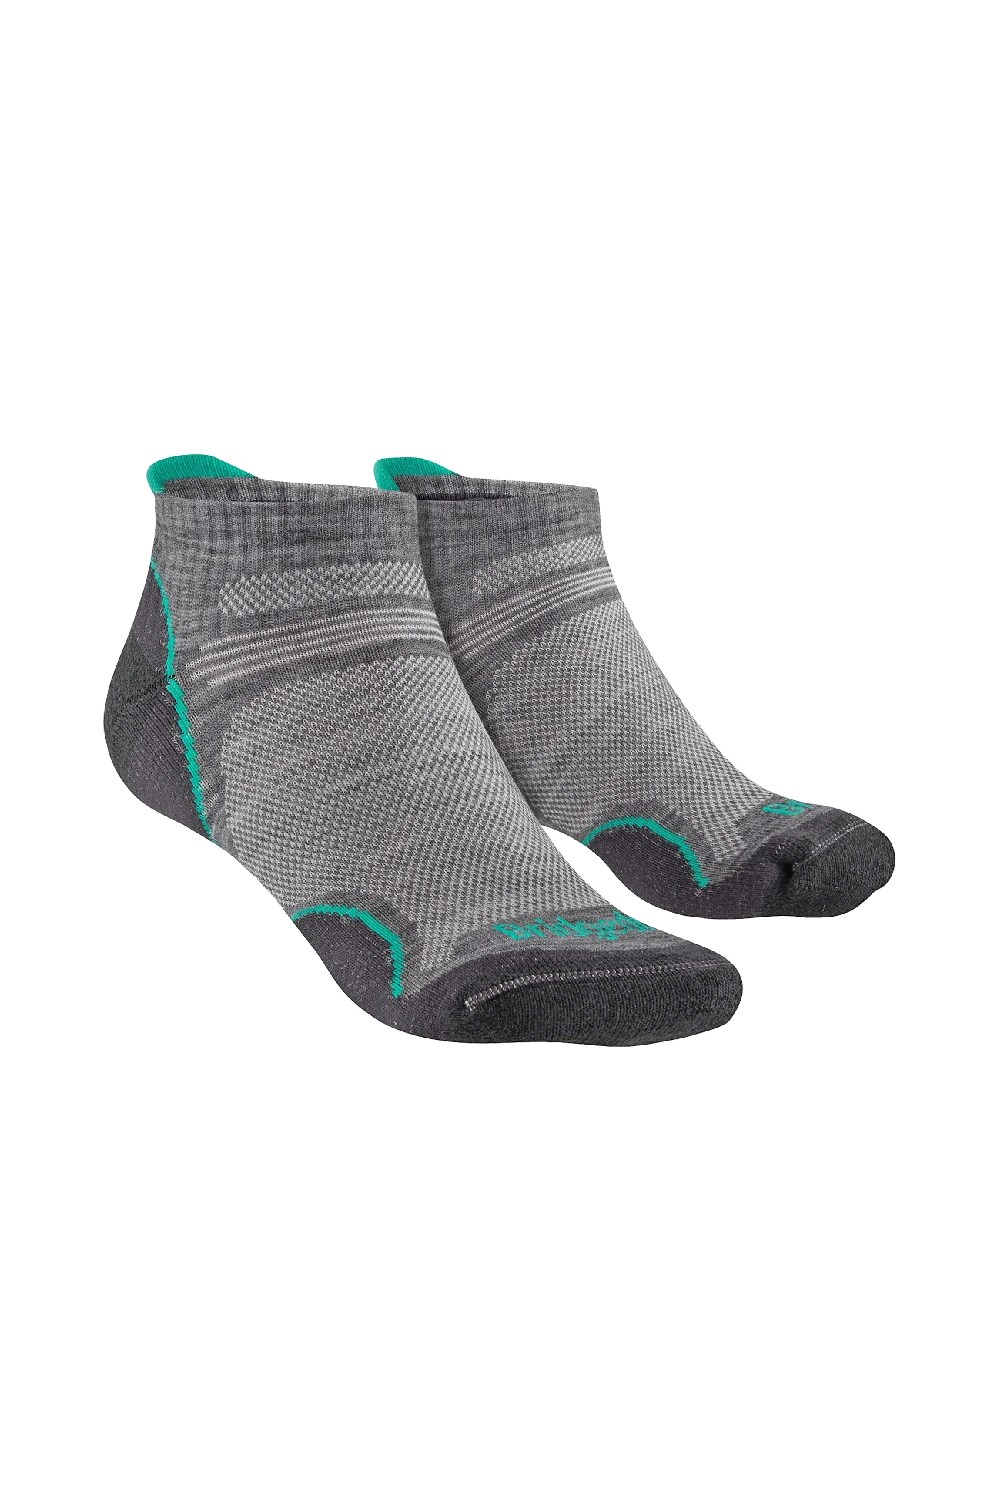 Womens Hiking Ultralight T2 Merino Socks -